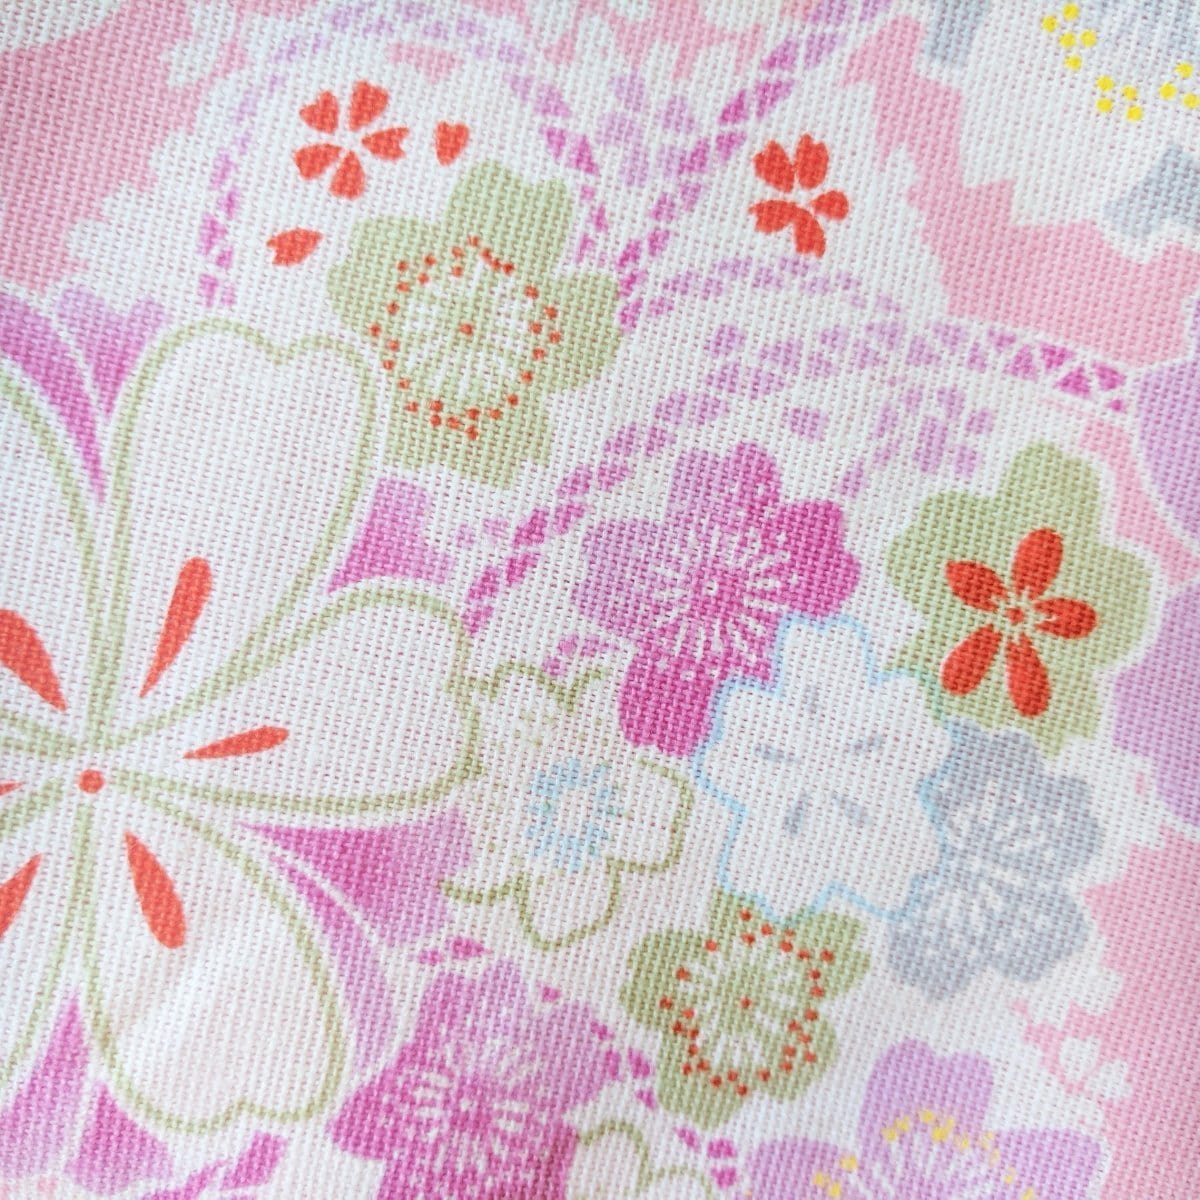 Kimono Knot Bag Wristlet Cherry Blossom Sakura Pink - Pattern